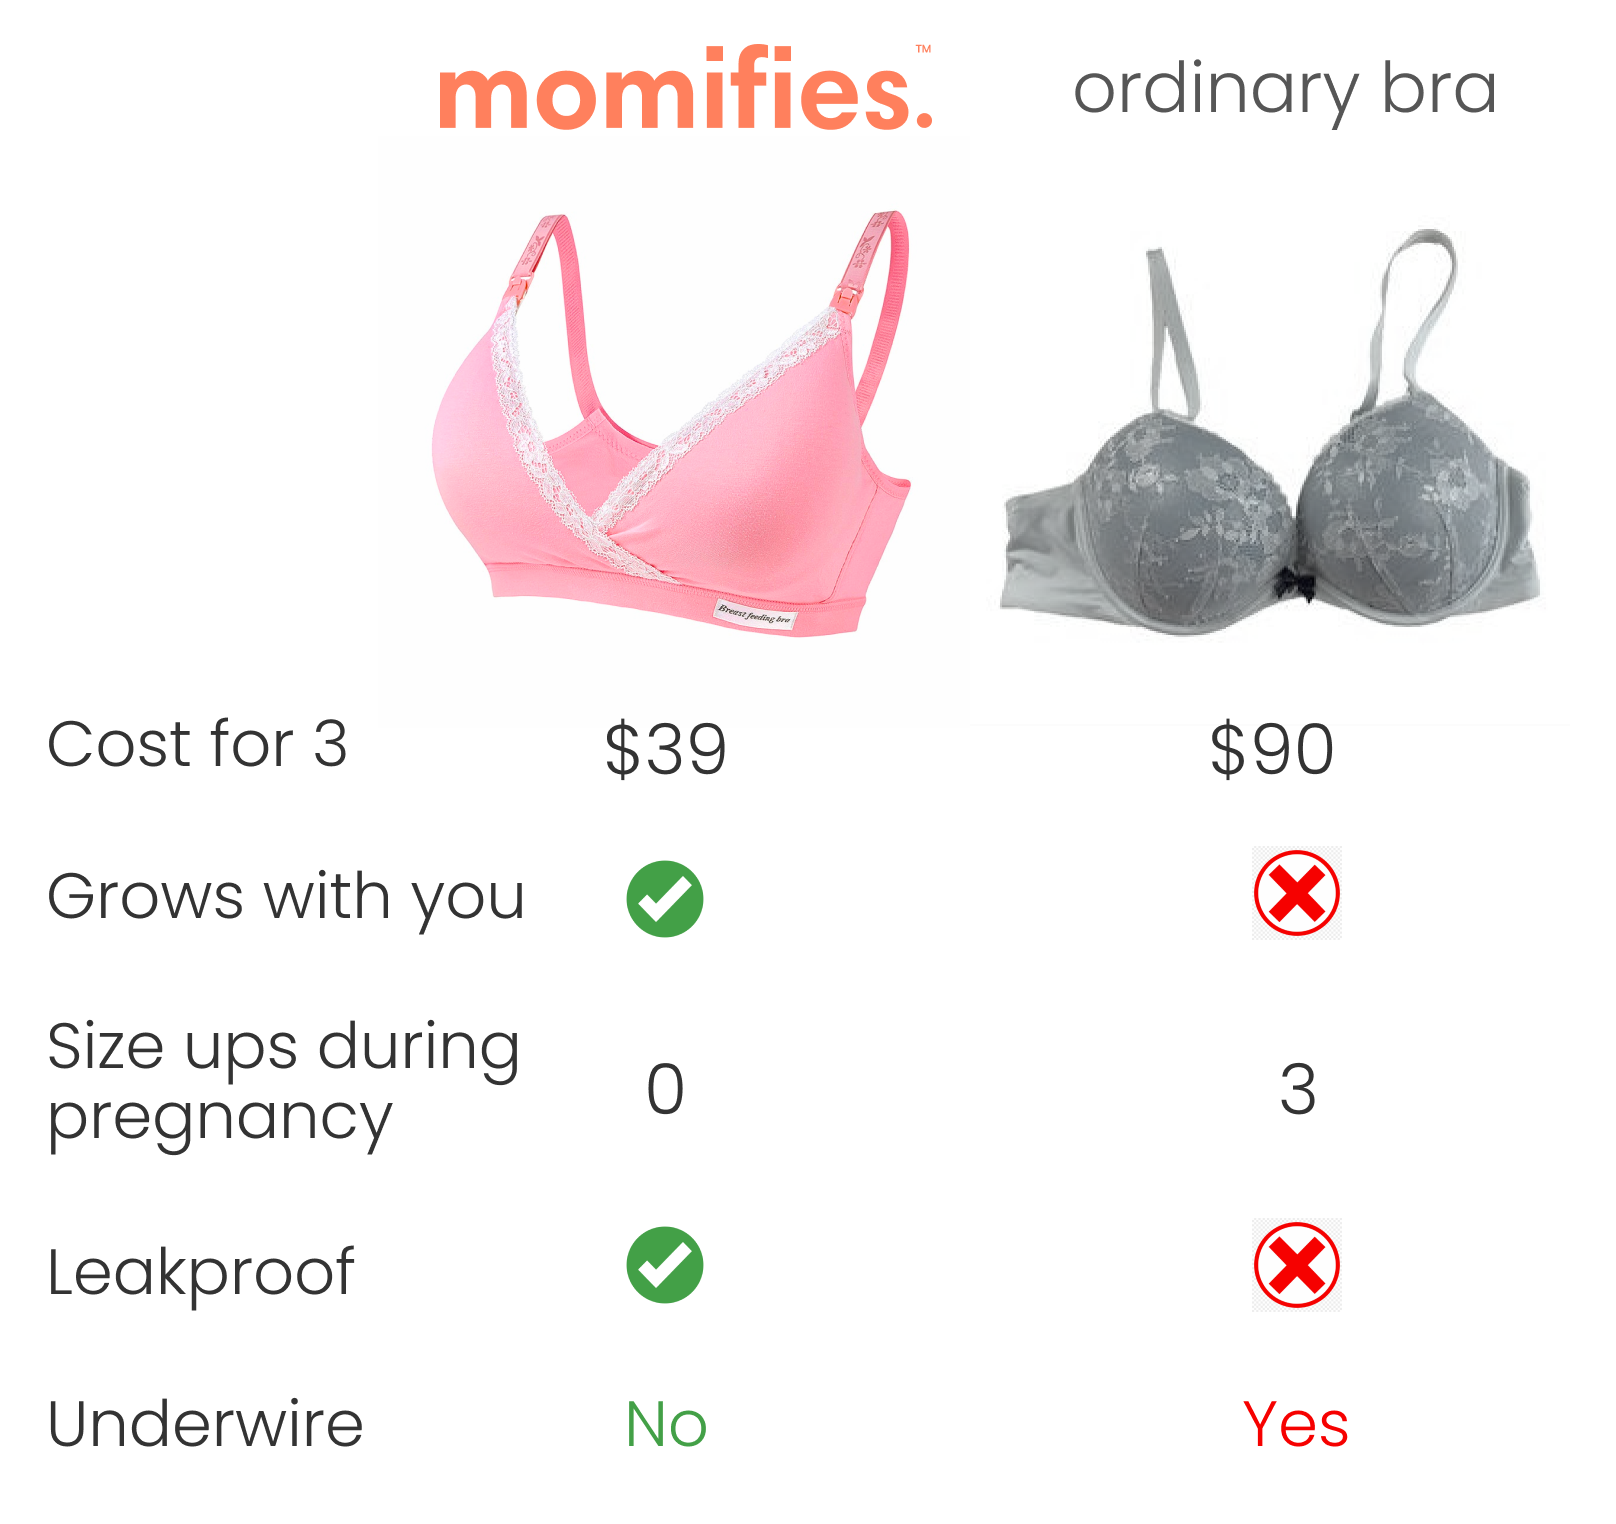 Compare different nursing bras